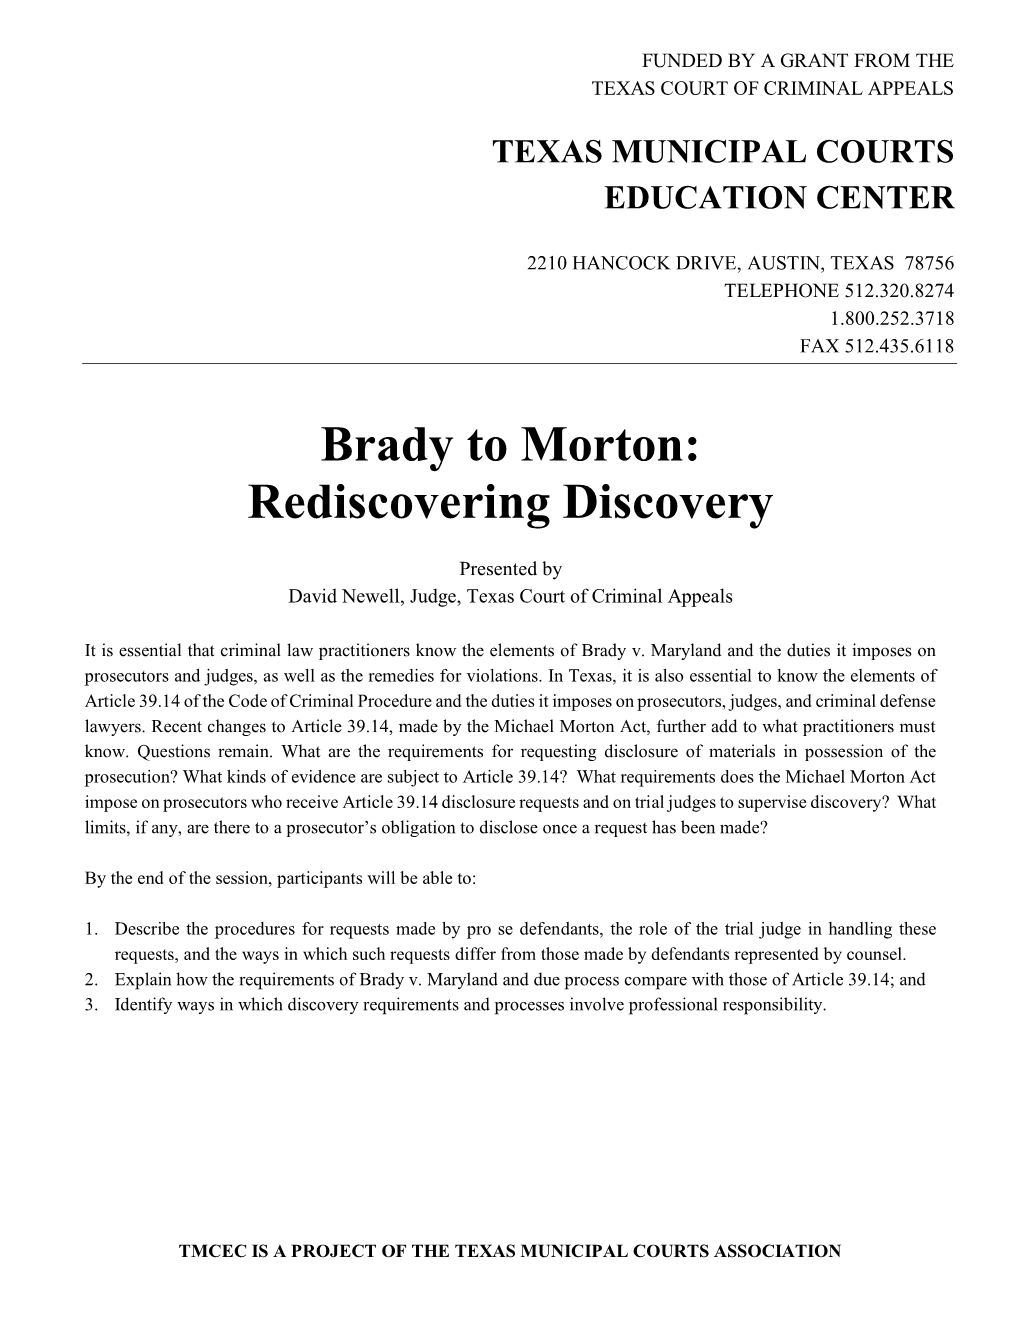 Brady to Morton: Rediscovering Discovery